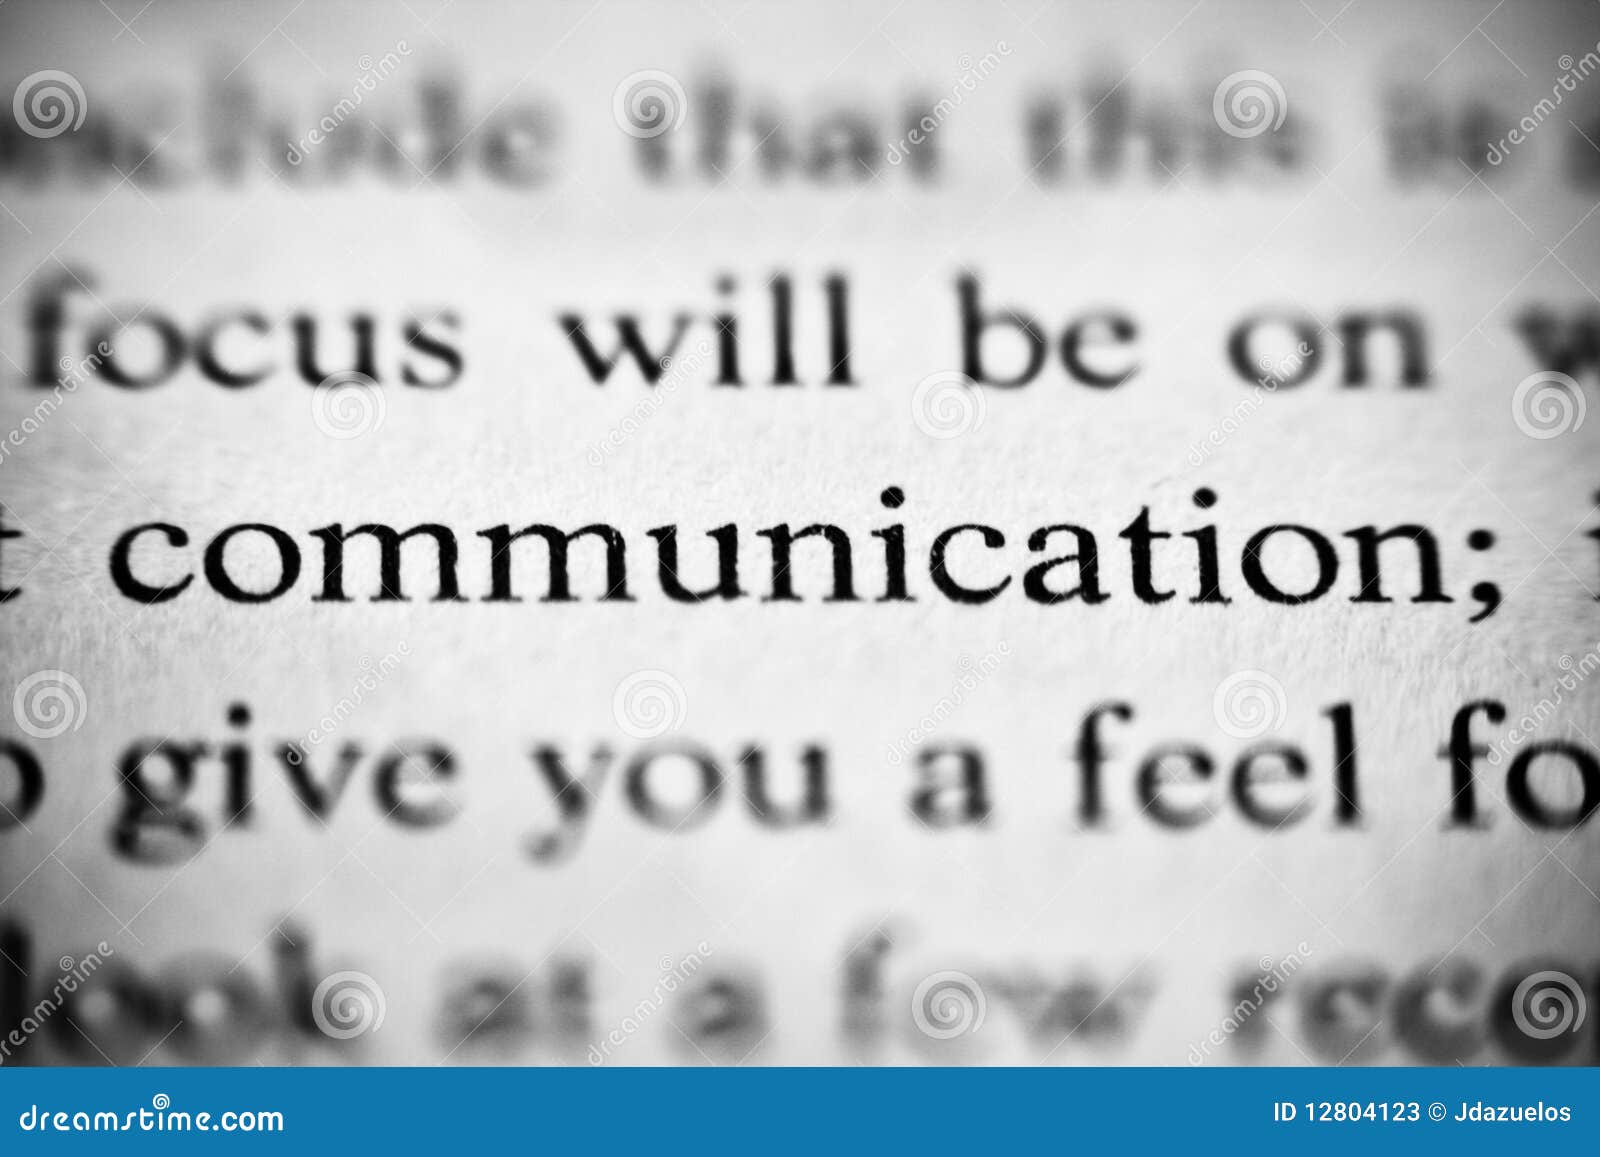 focus on communication